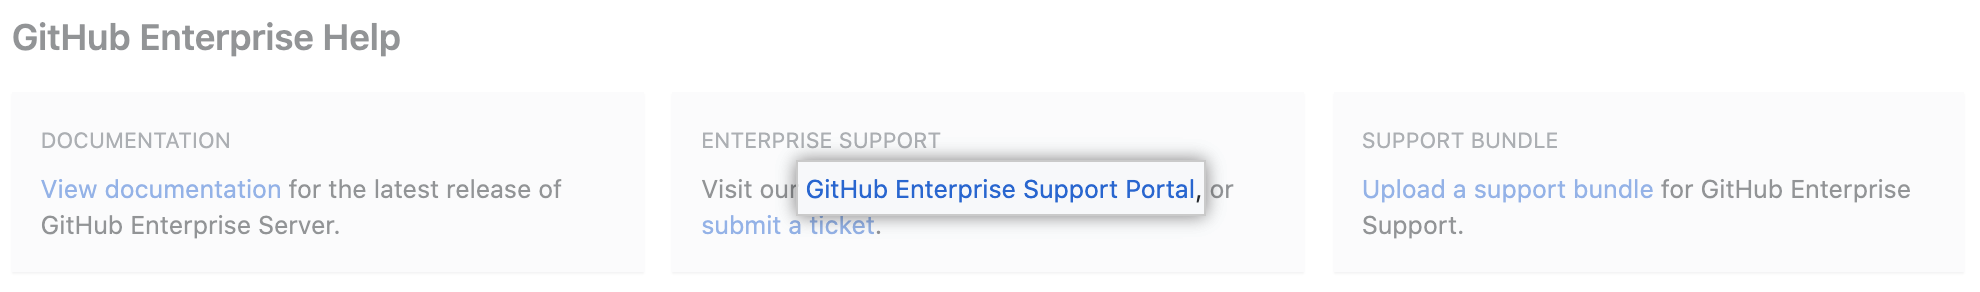 Enterprise Support サイトに移動するリンク